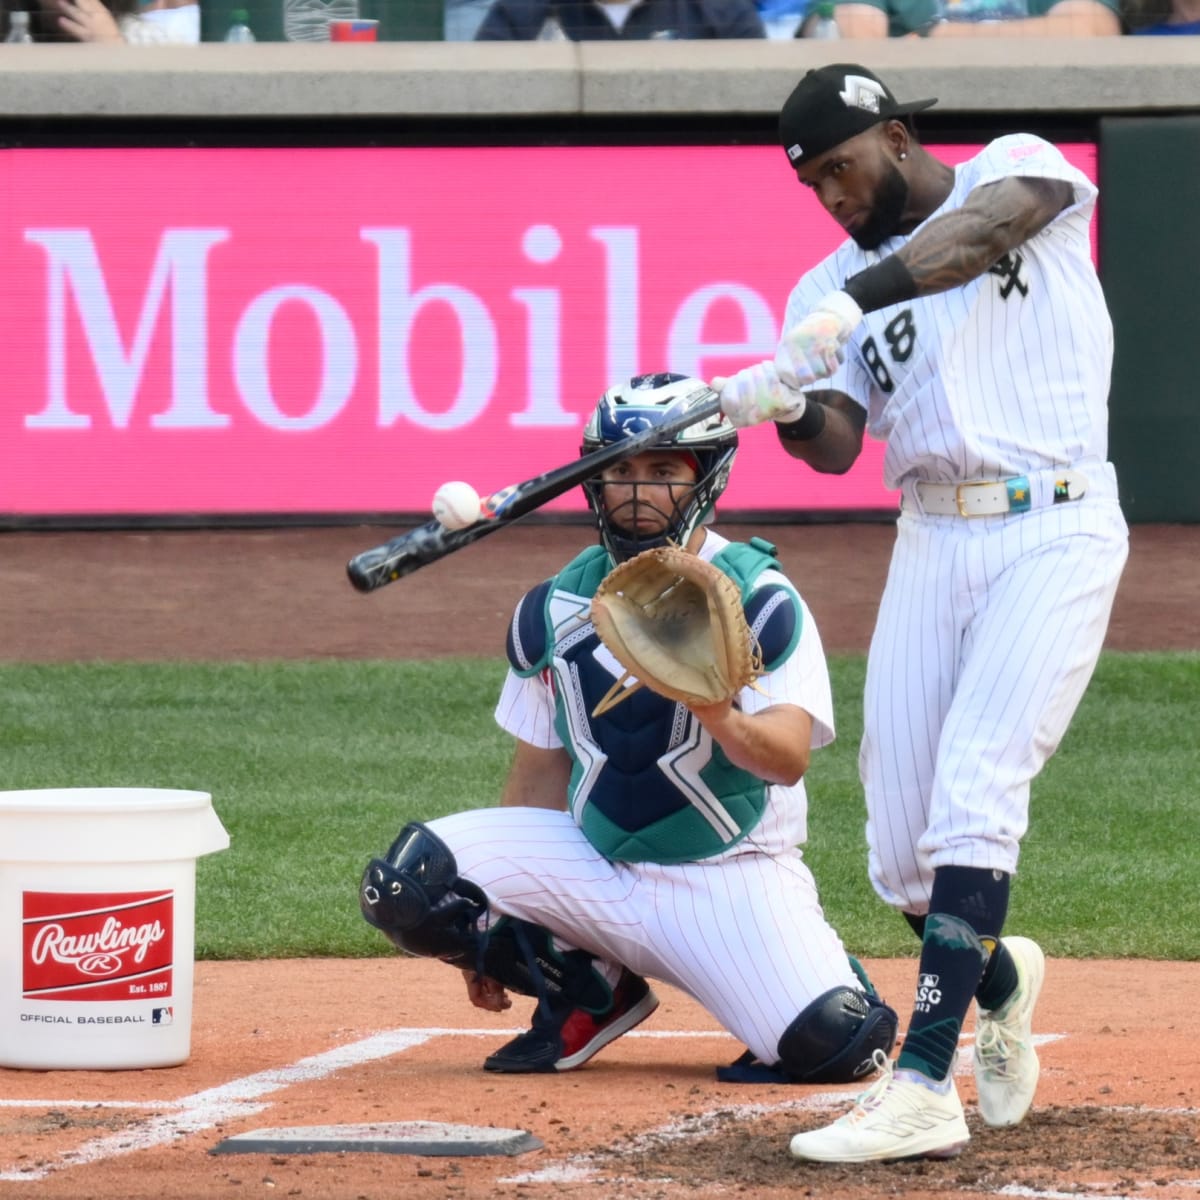 MLB on X: Luis Robert Jr. has been demolishing baseballs. 😤 (MLB